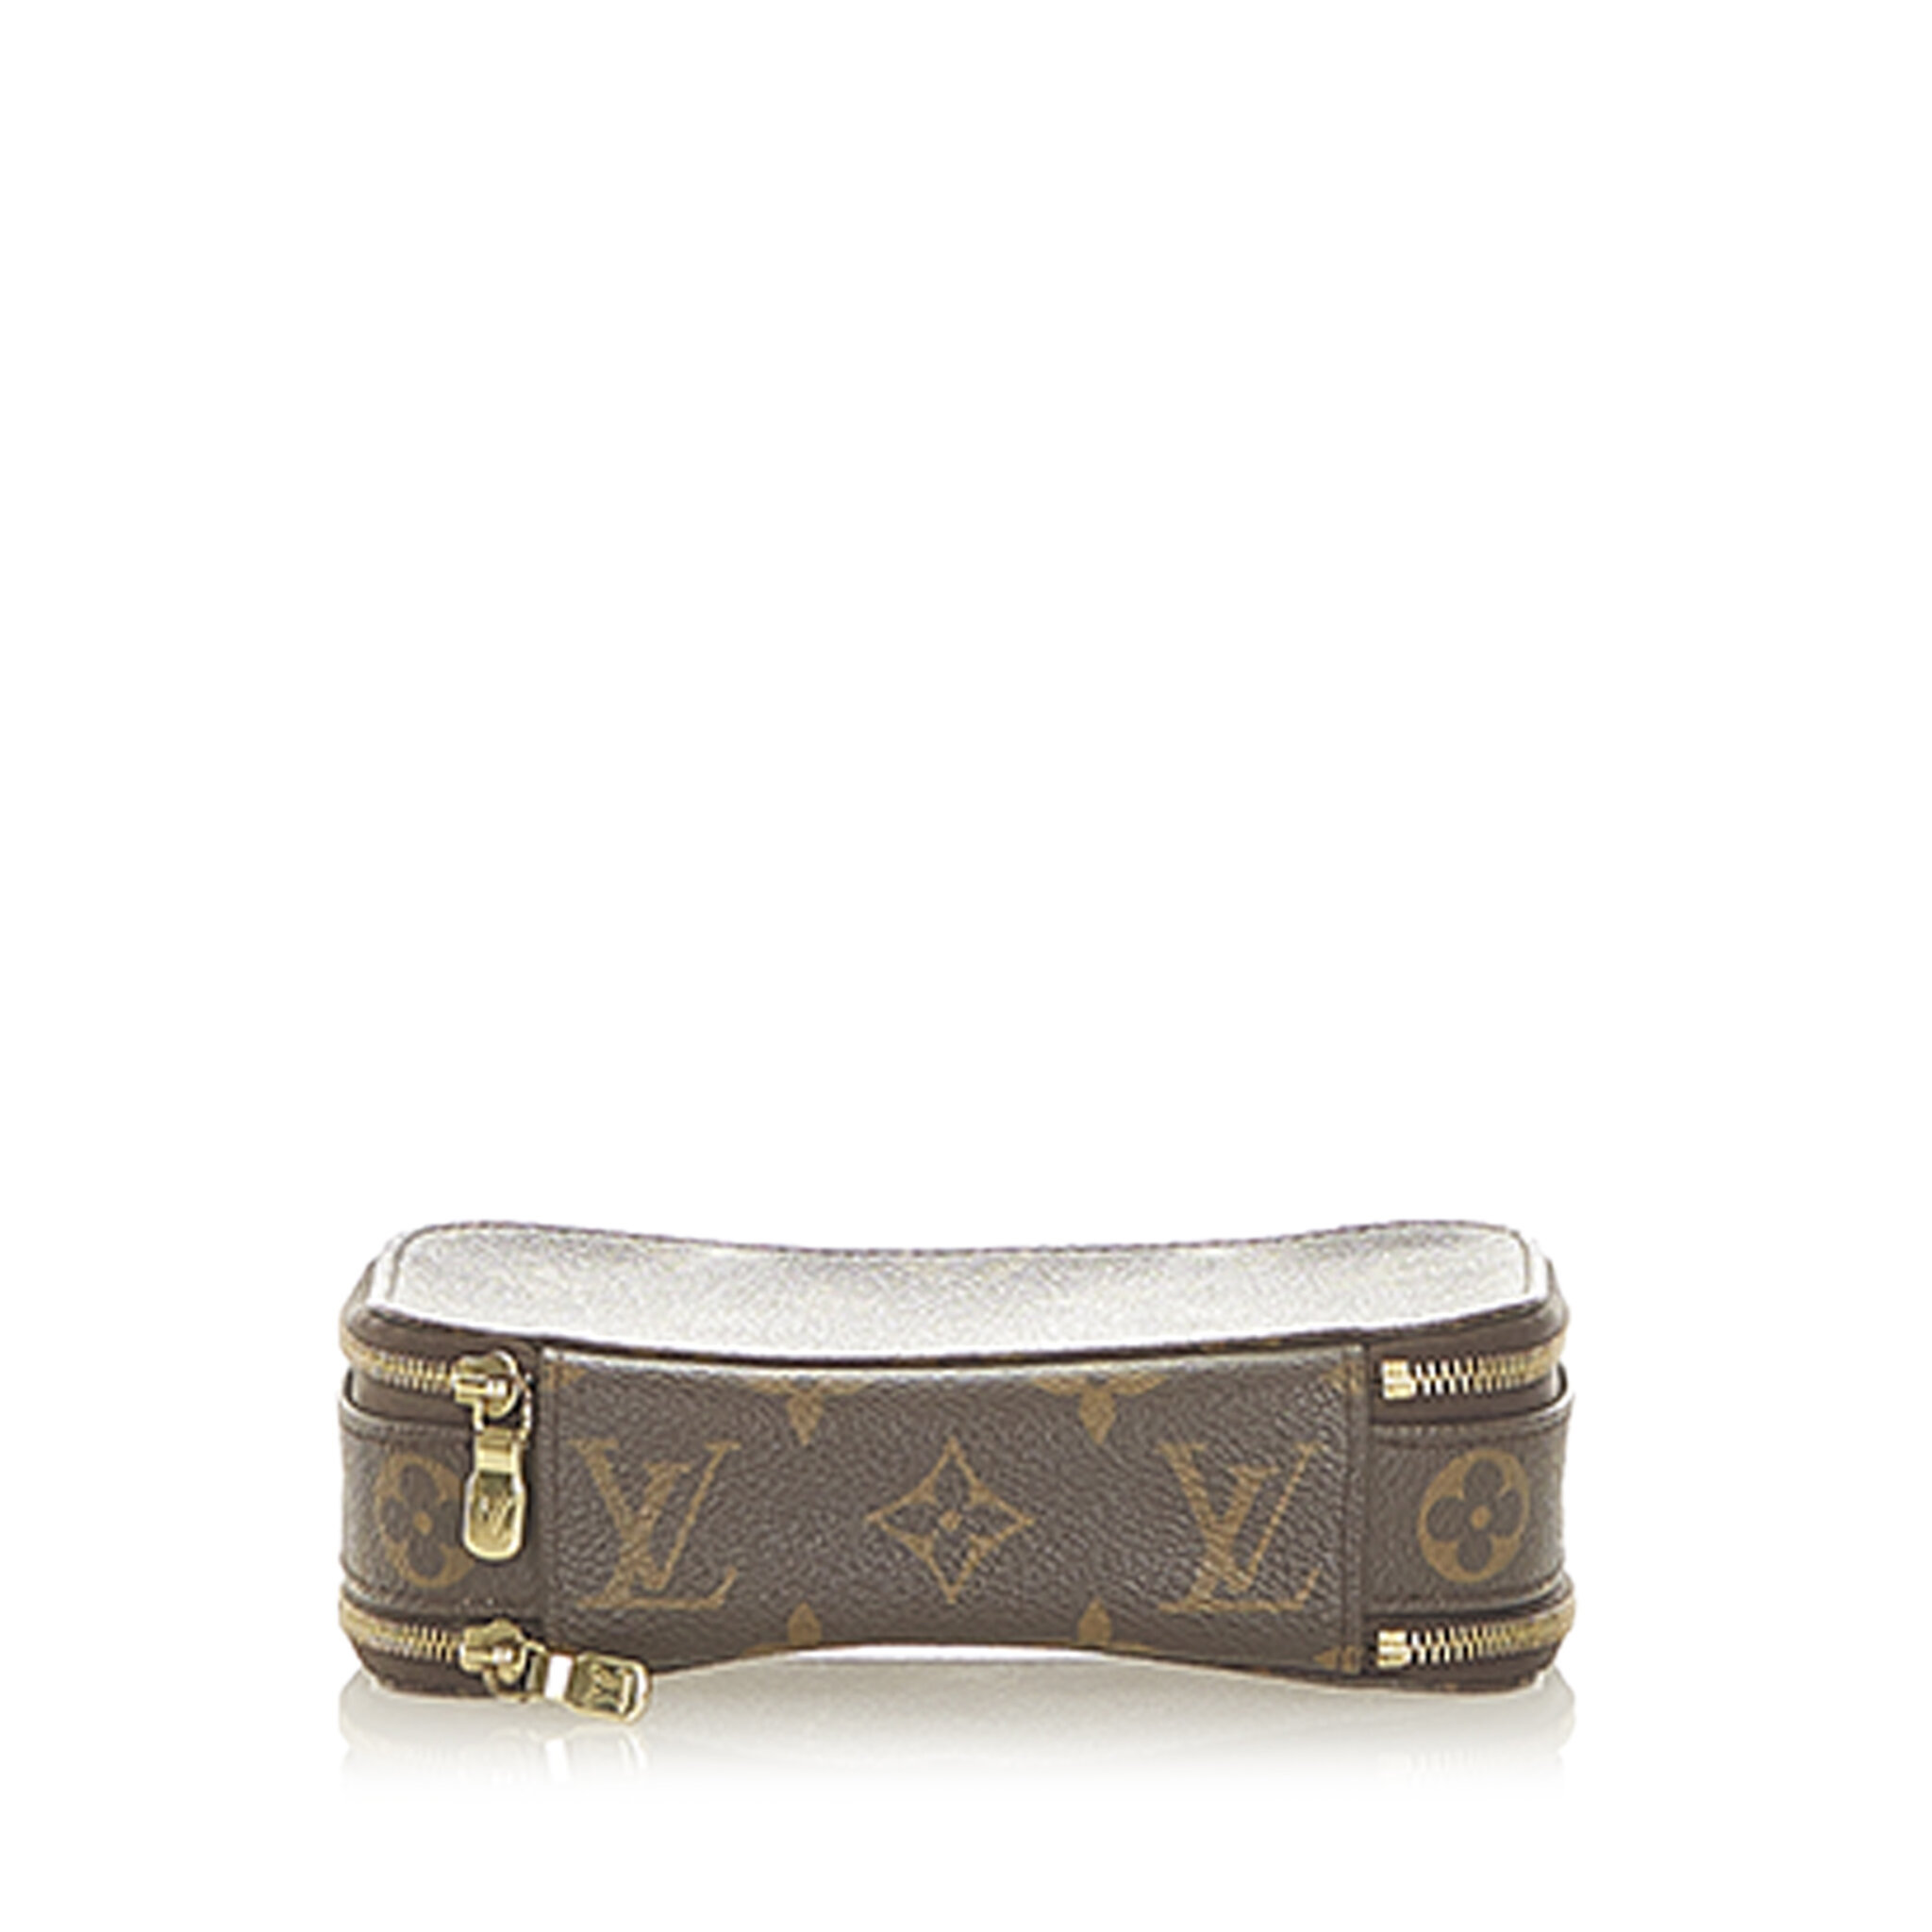 Louis Vuitton Monogram Trousse Blush Pm, brown